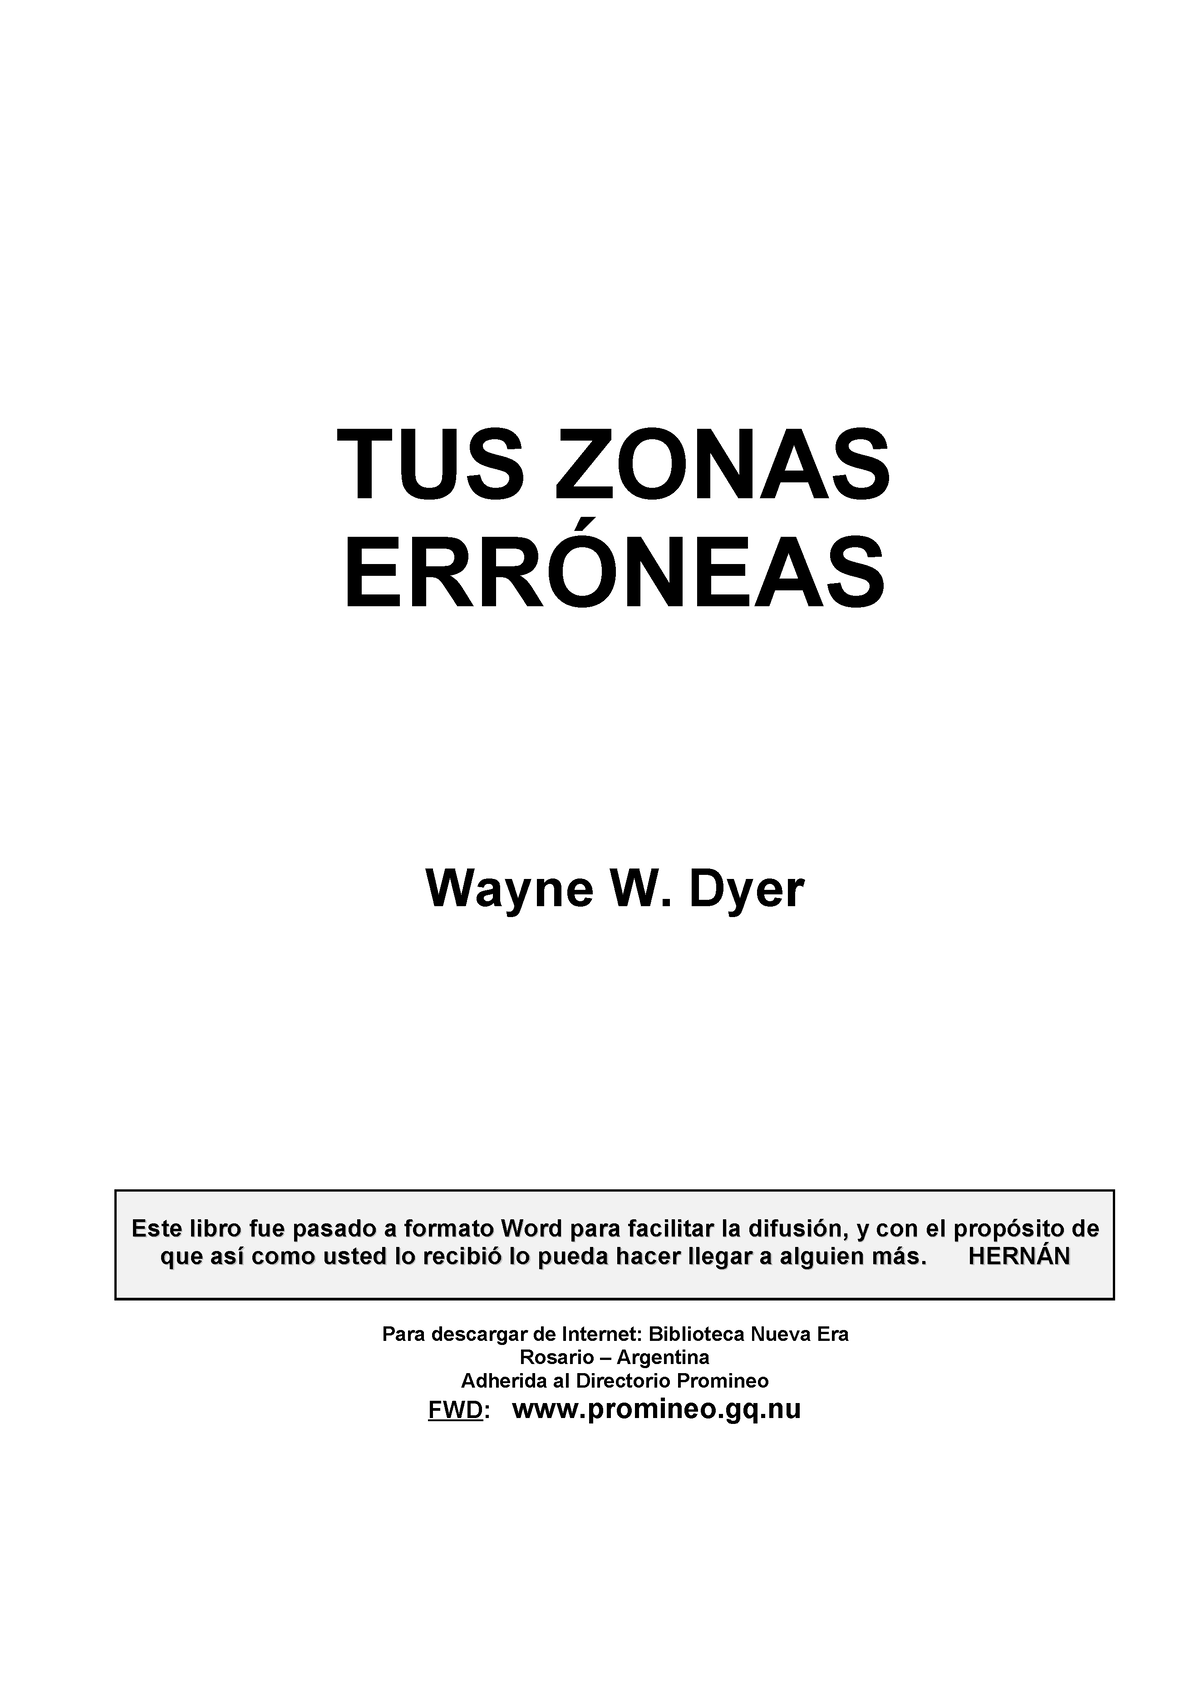 Tus zonas erroneas wayne w dyer tuz zonas erroneas - TUS ZONAS ERRÓNEAS  Wayne W. Dyer Este libro fue - Studocu